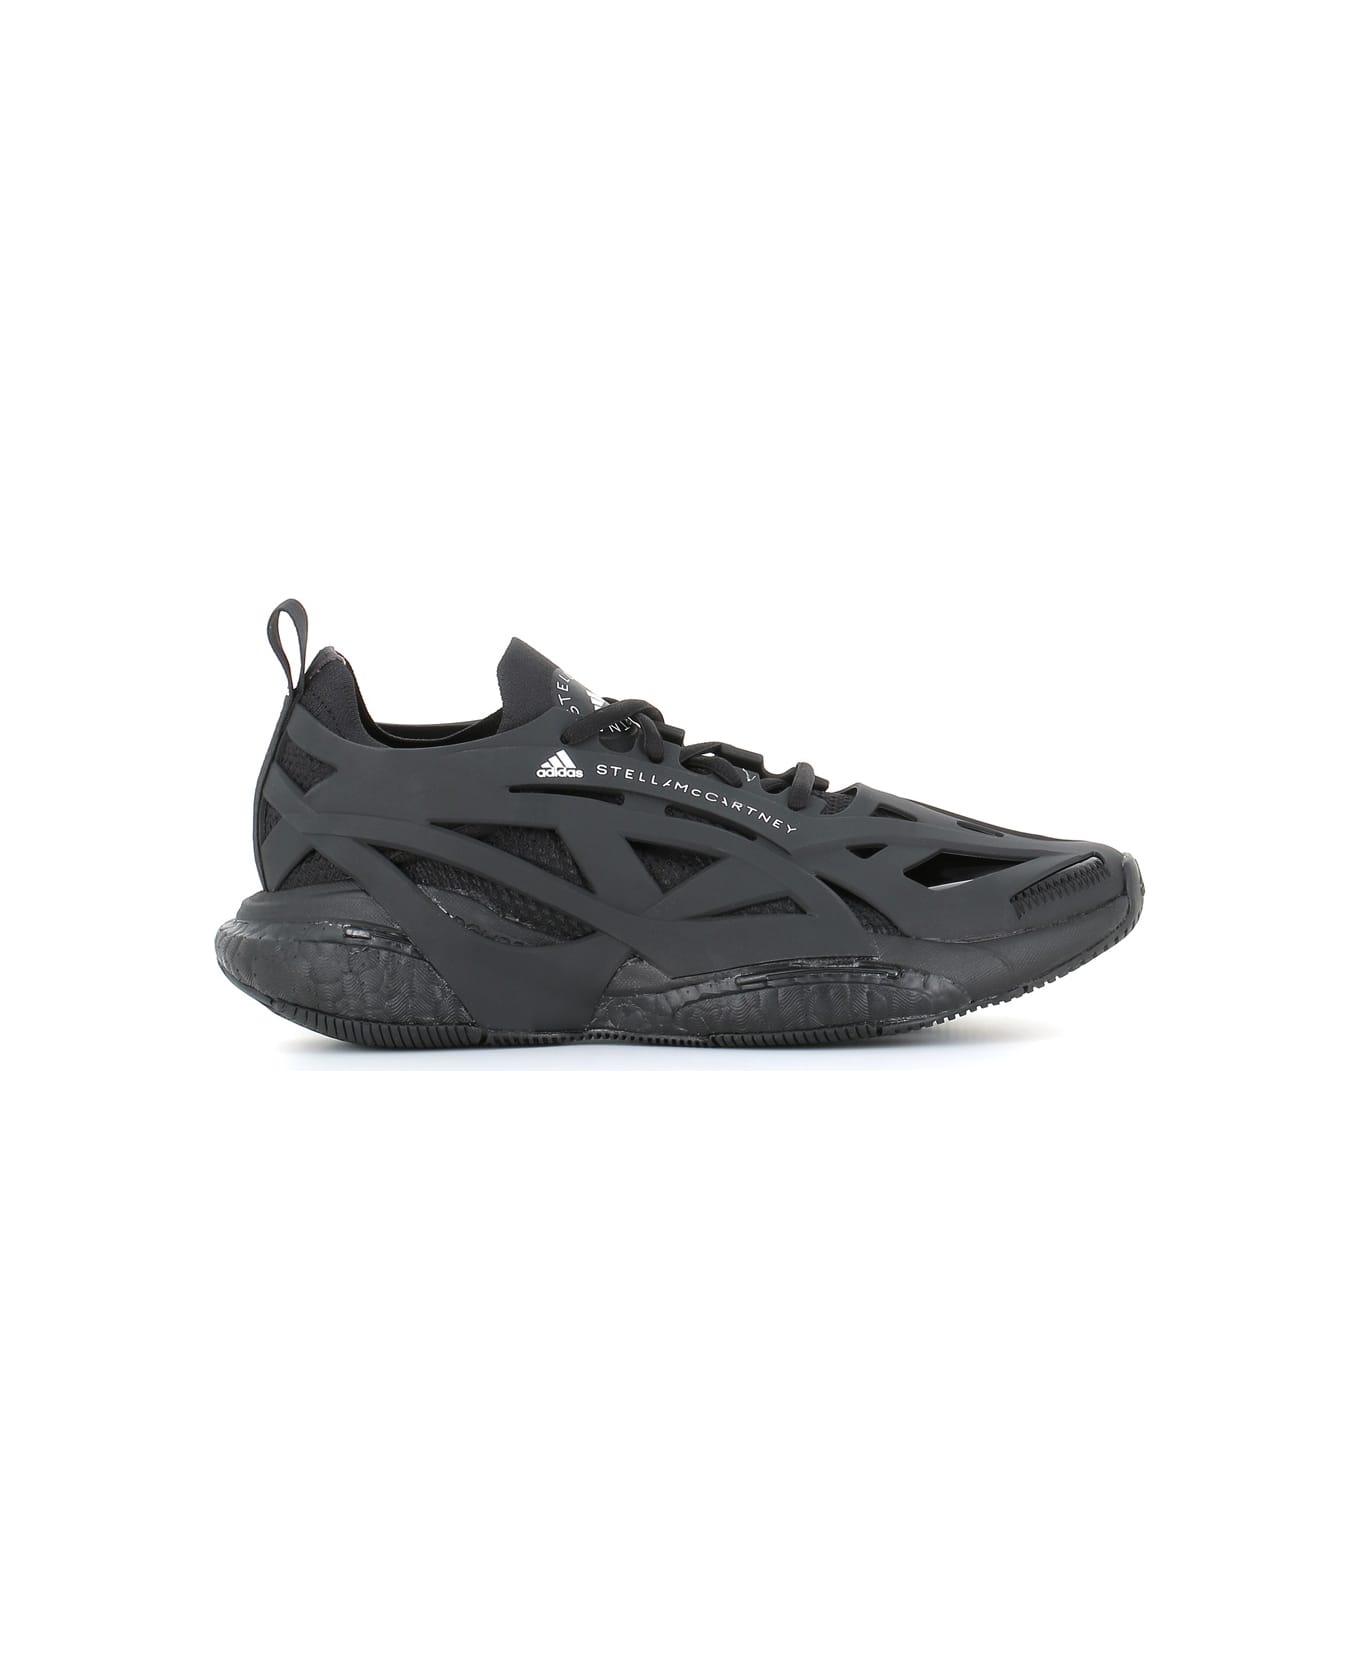 Adidas by Stella McCartney Solarglide Running Sneakers - Black